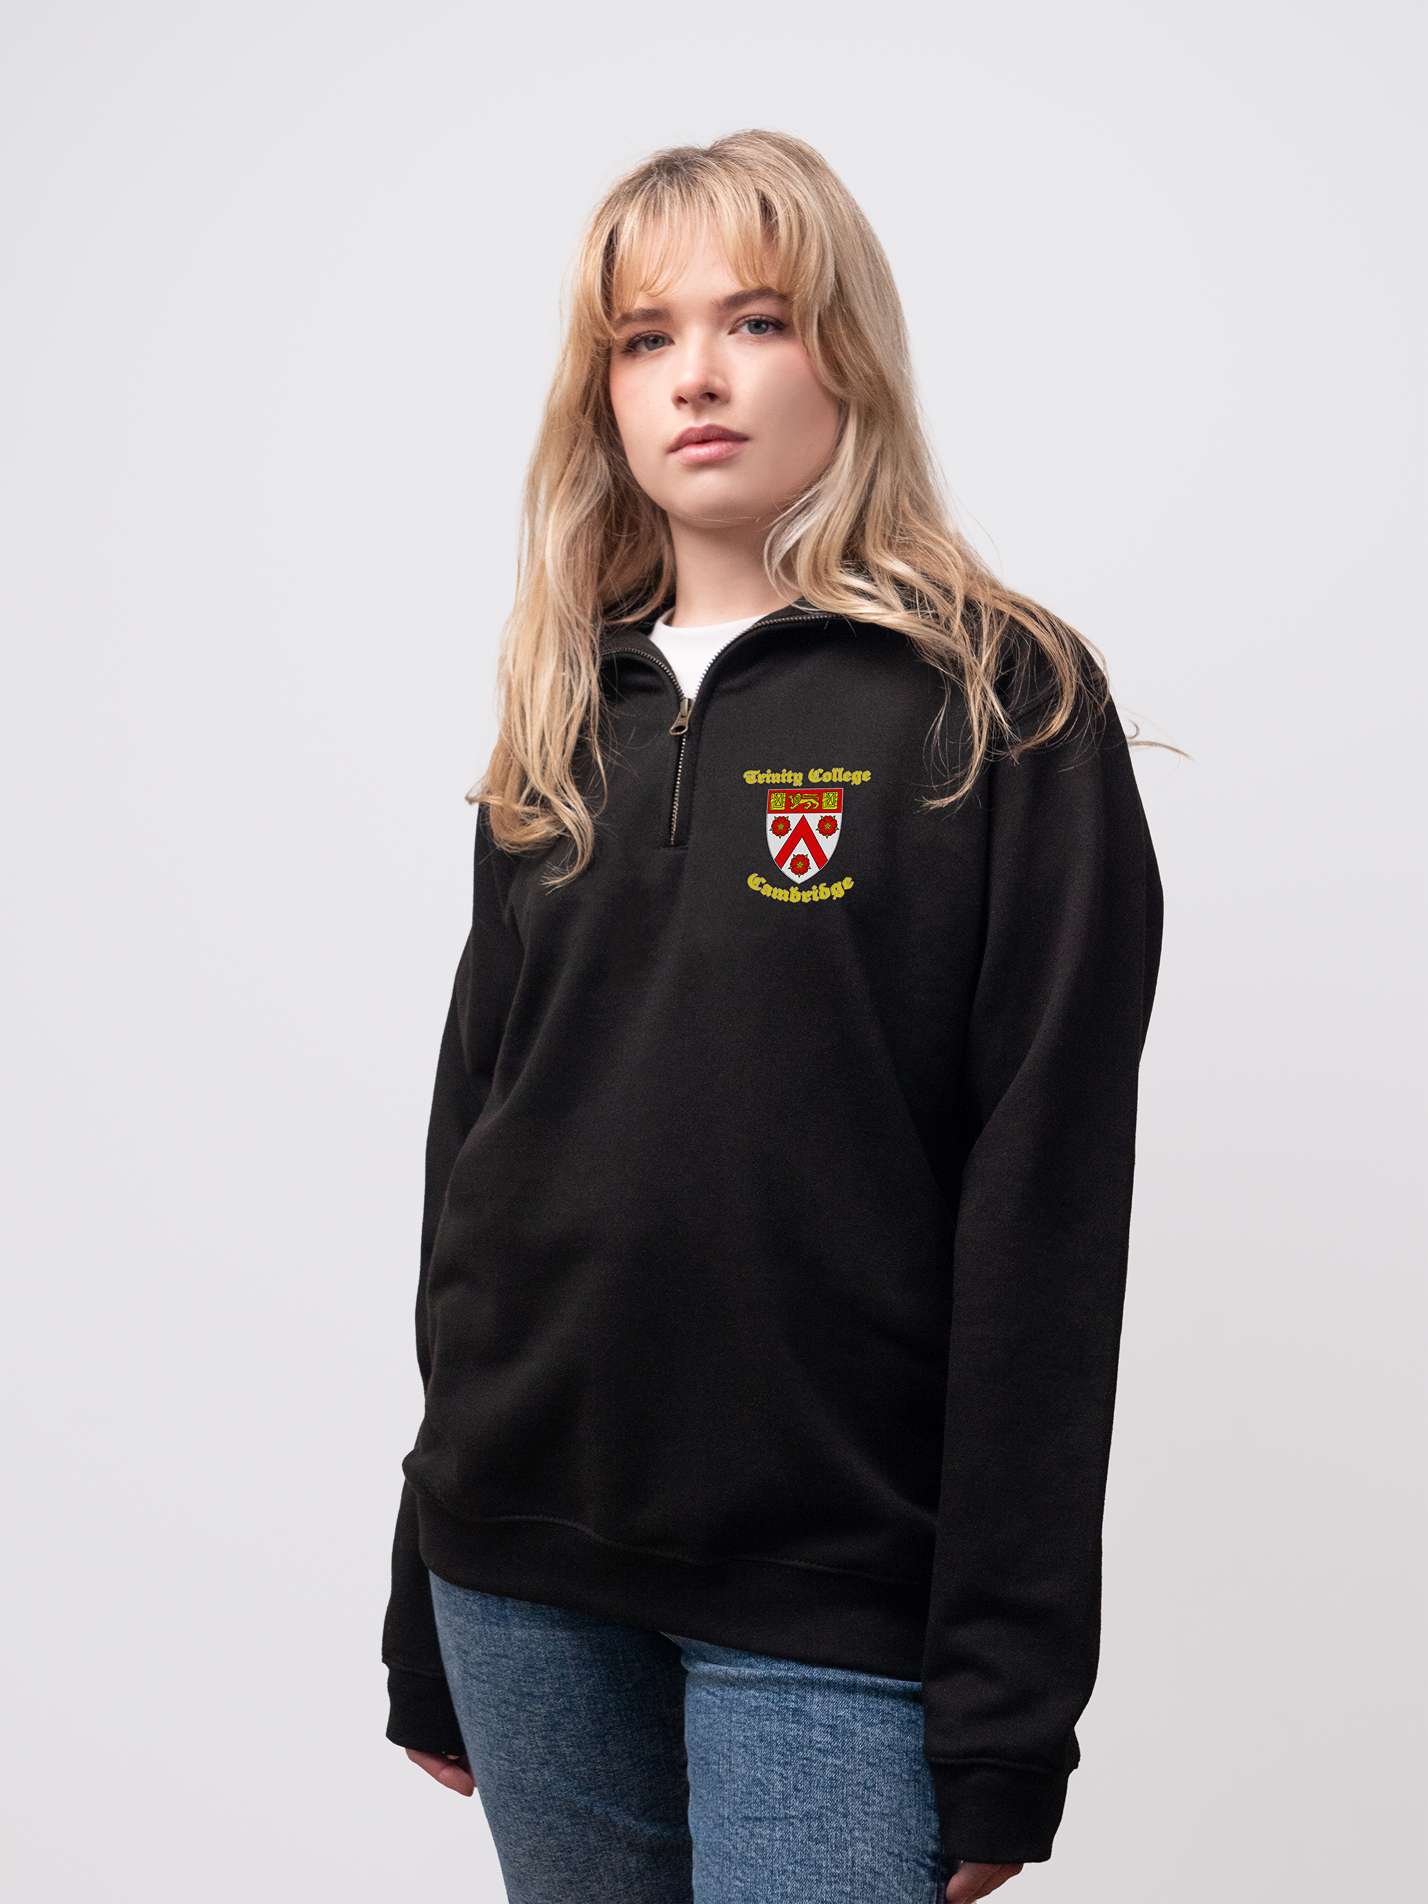 Trinity student wearing a black 1/4 zip sweatshirt 